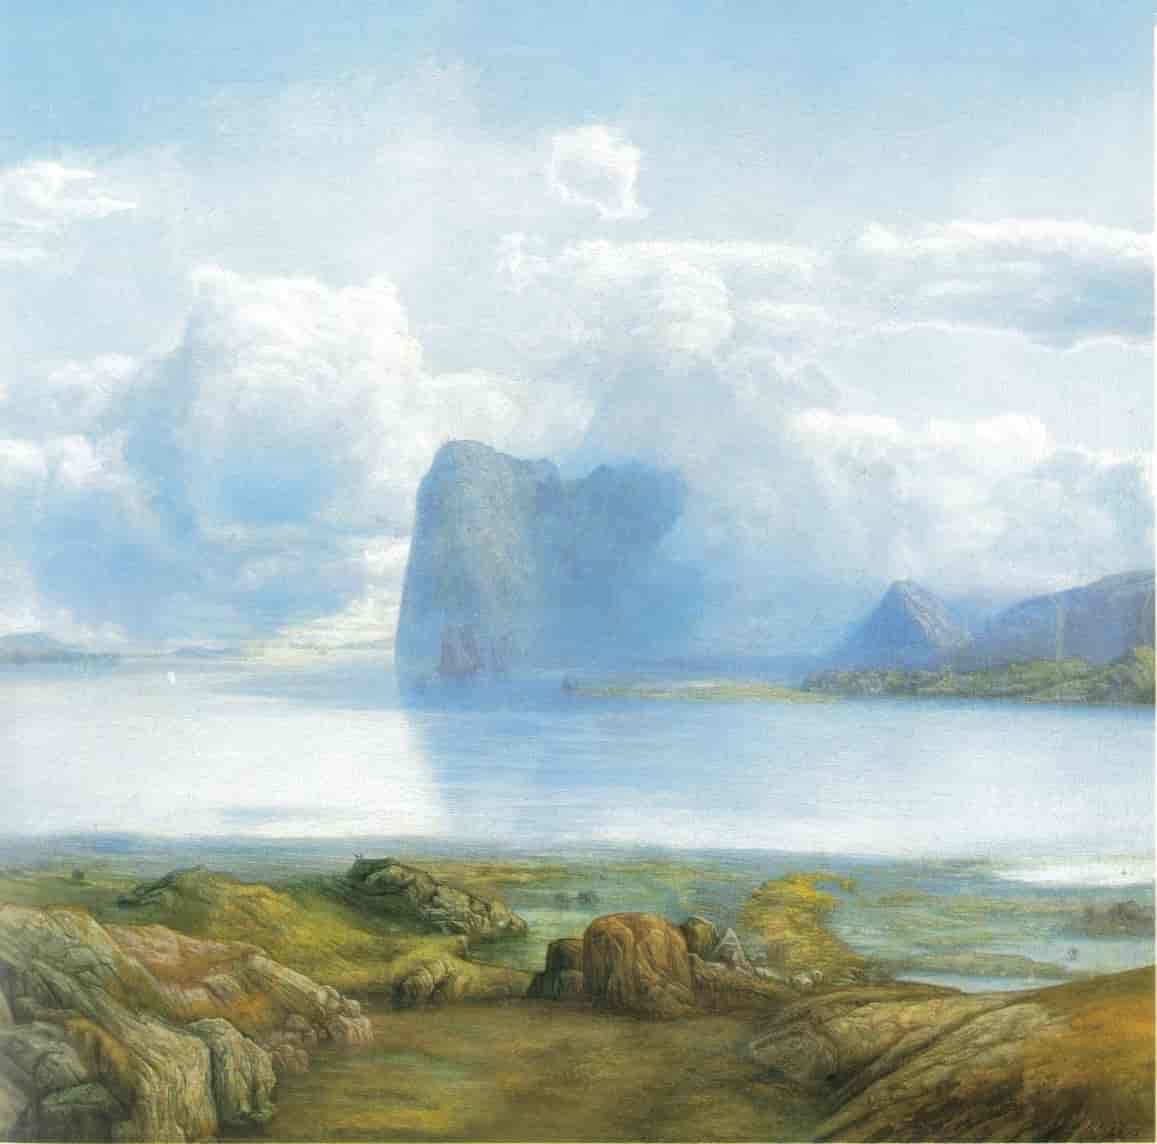 Borgøya